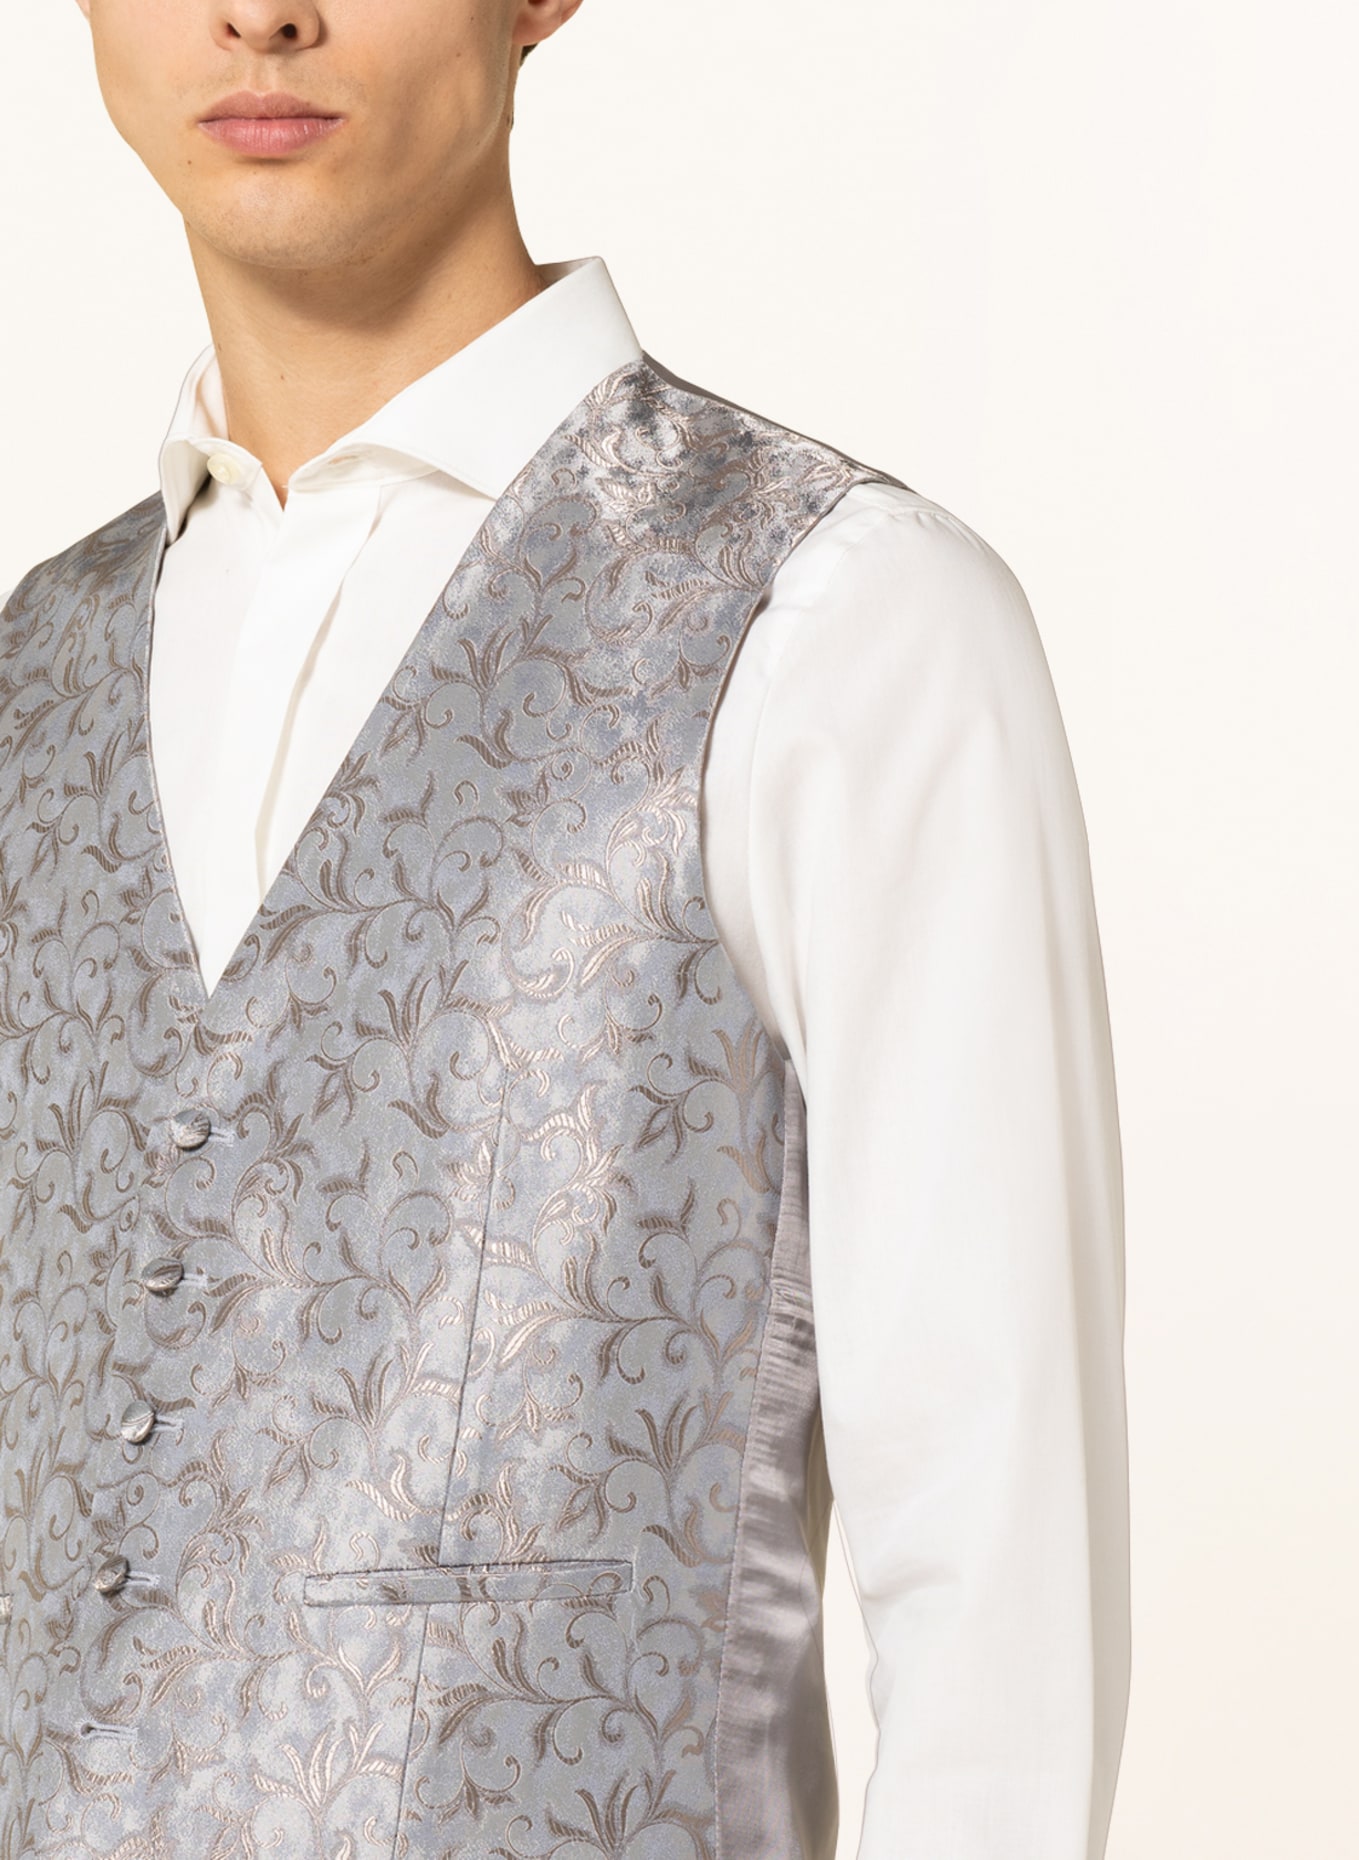 WILVORST Suit vest slim fit, Color: TAUPE/ LIGHT GRAY/ GRAY (Image 4)